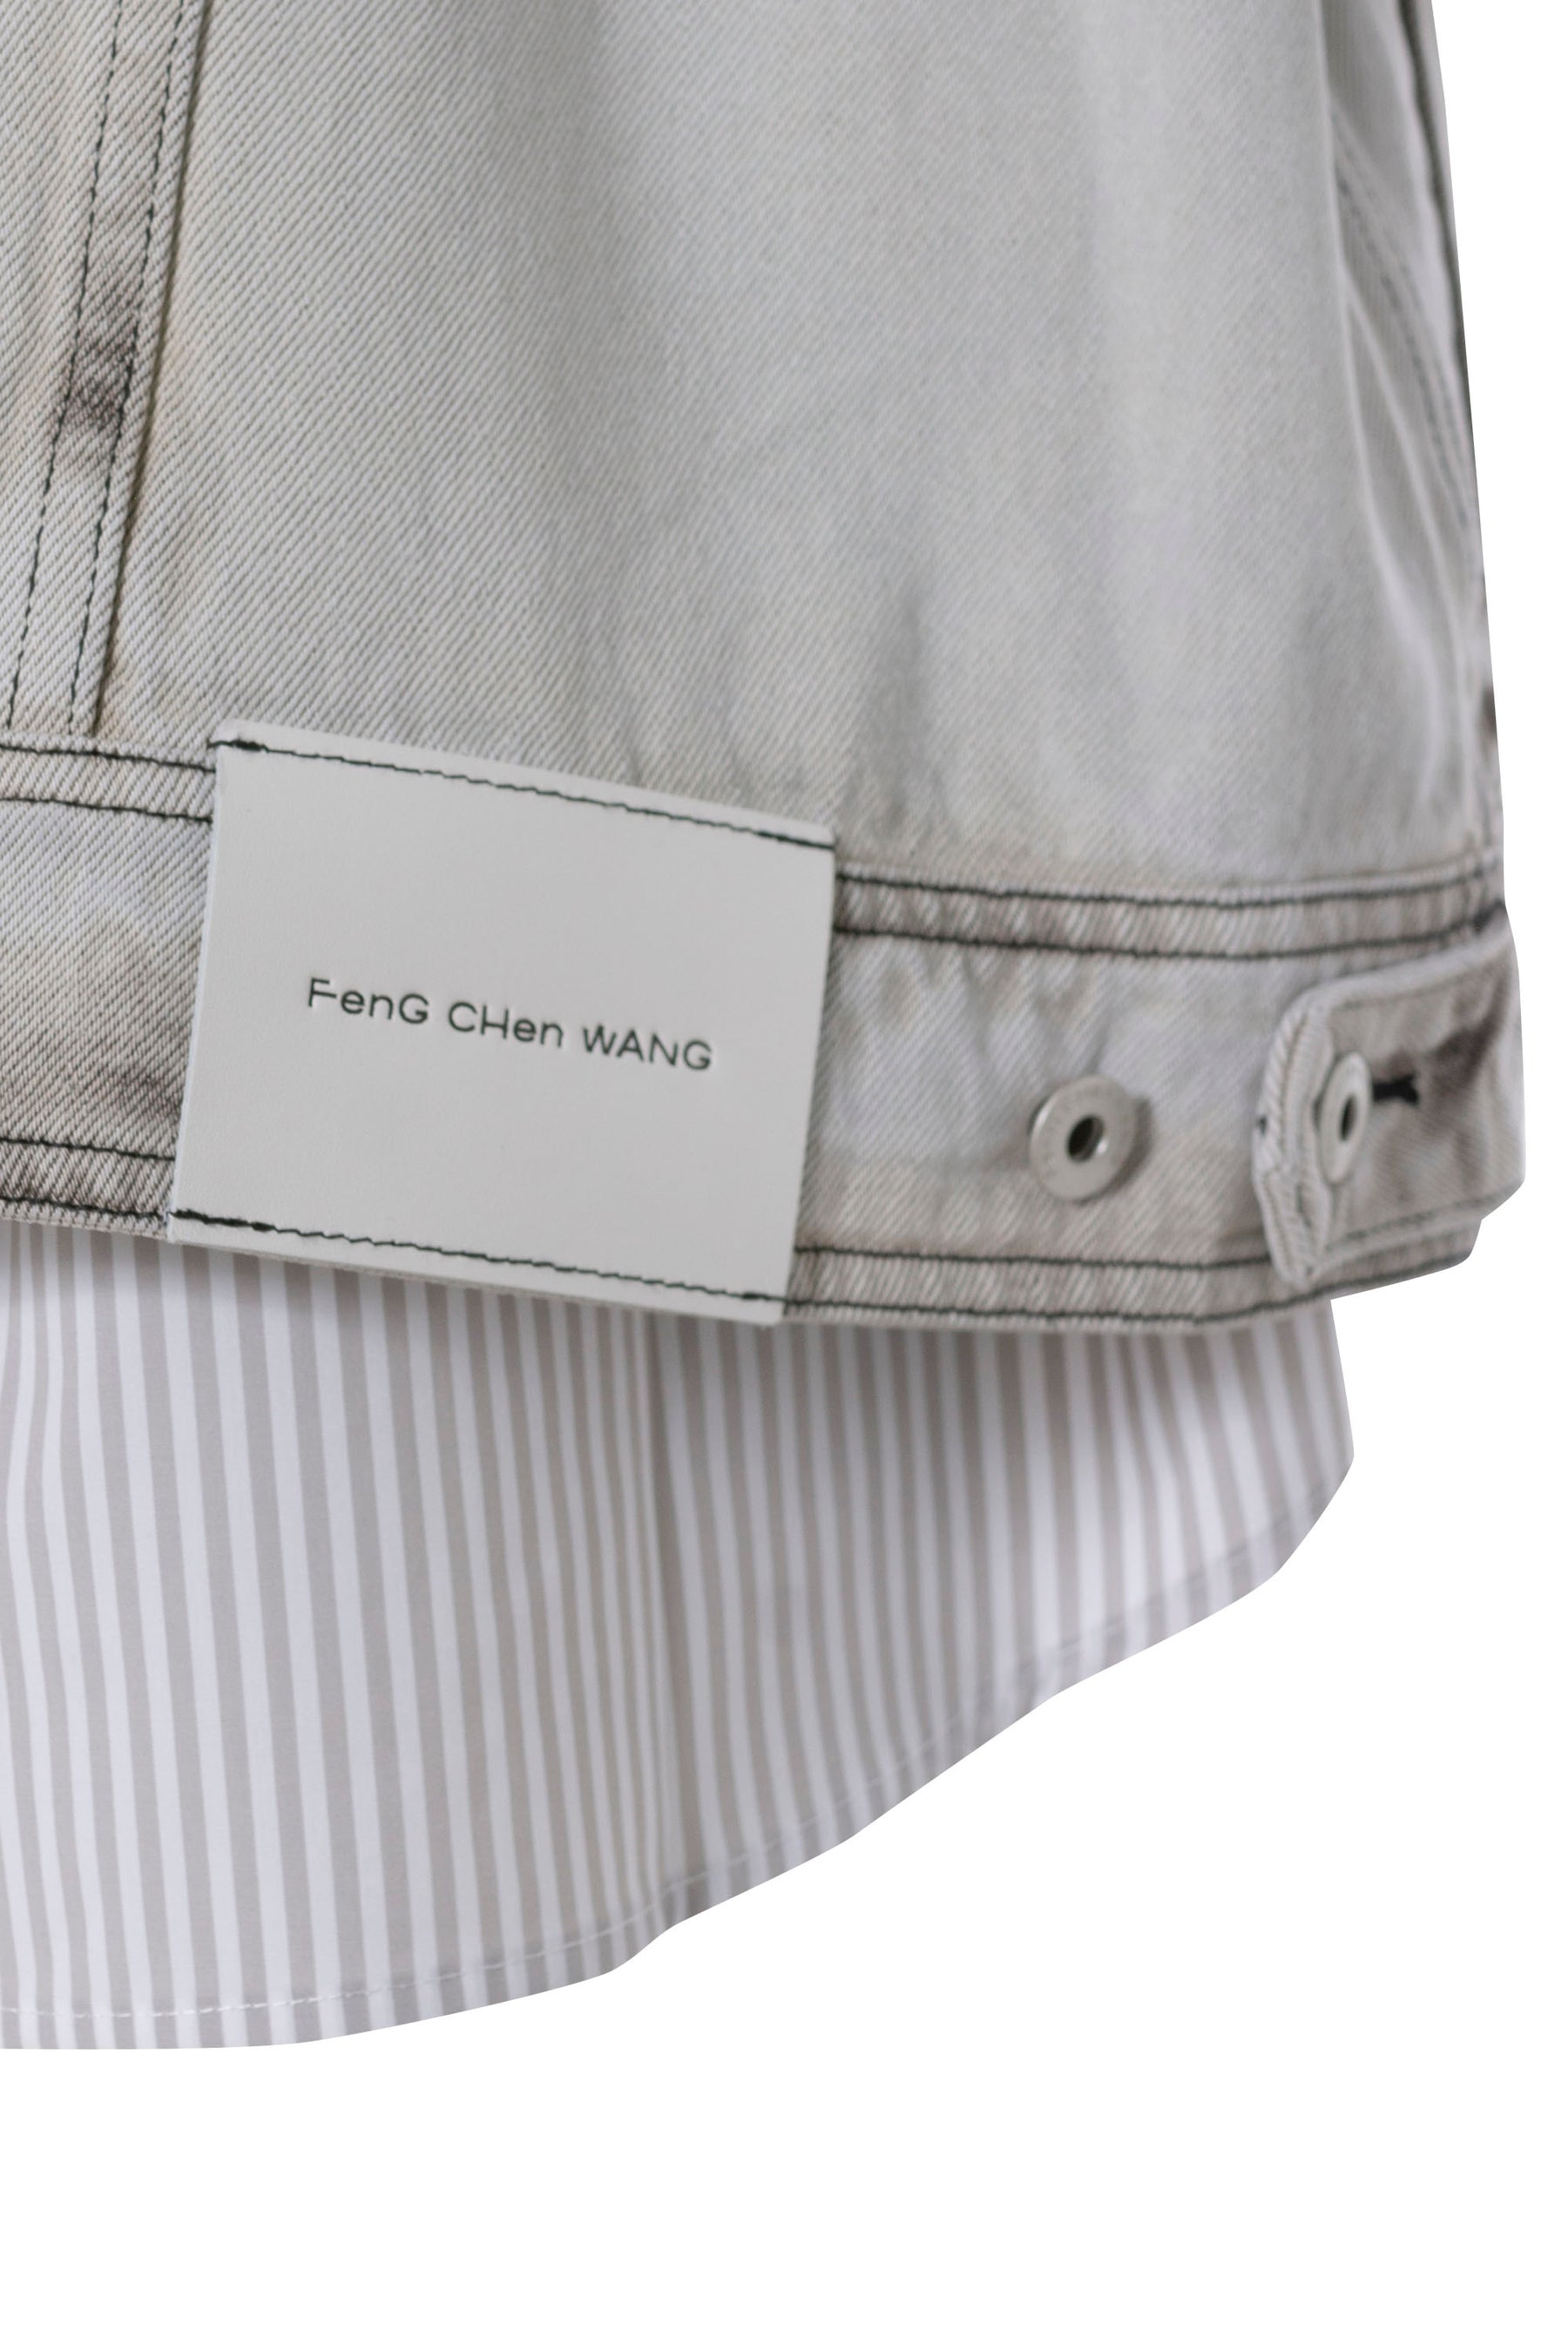 Feng Chen Wang Embossed Jacket